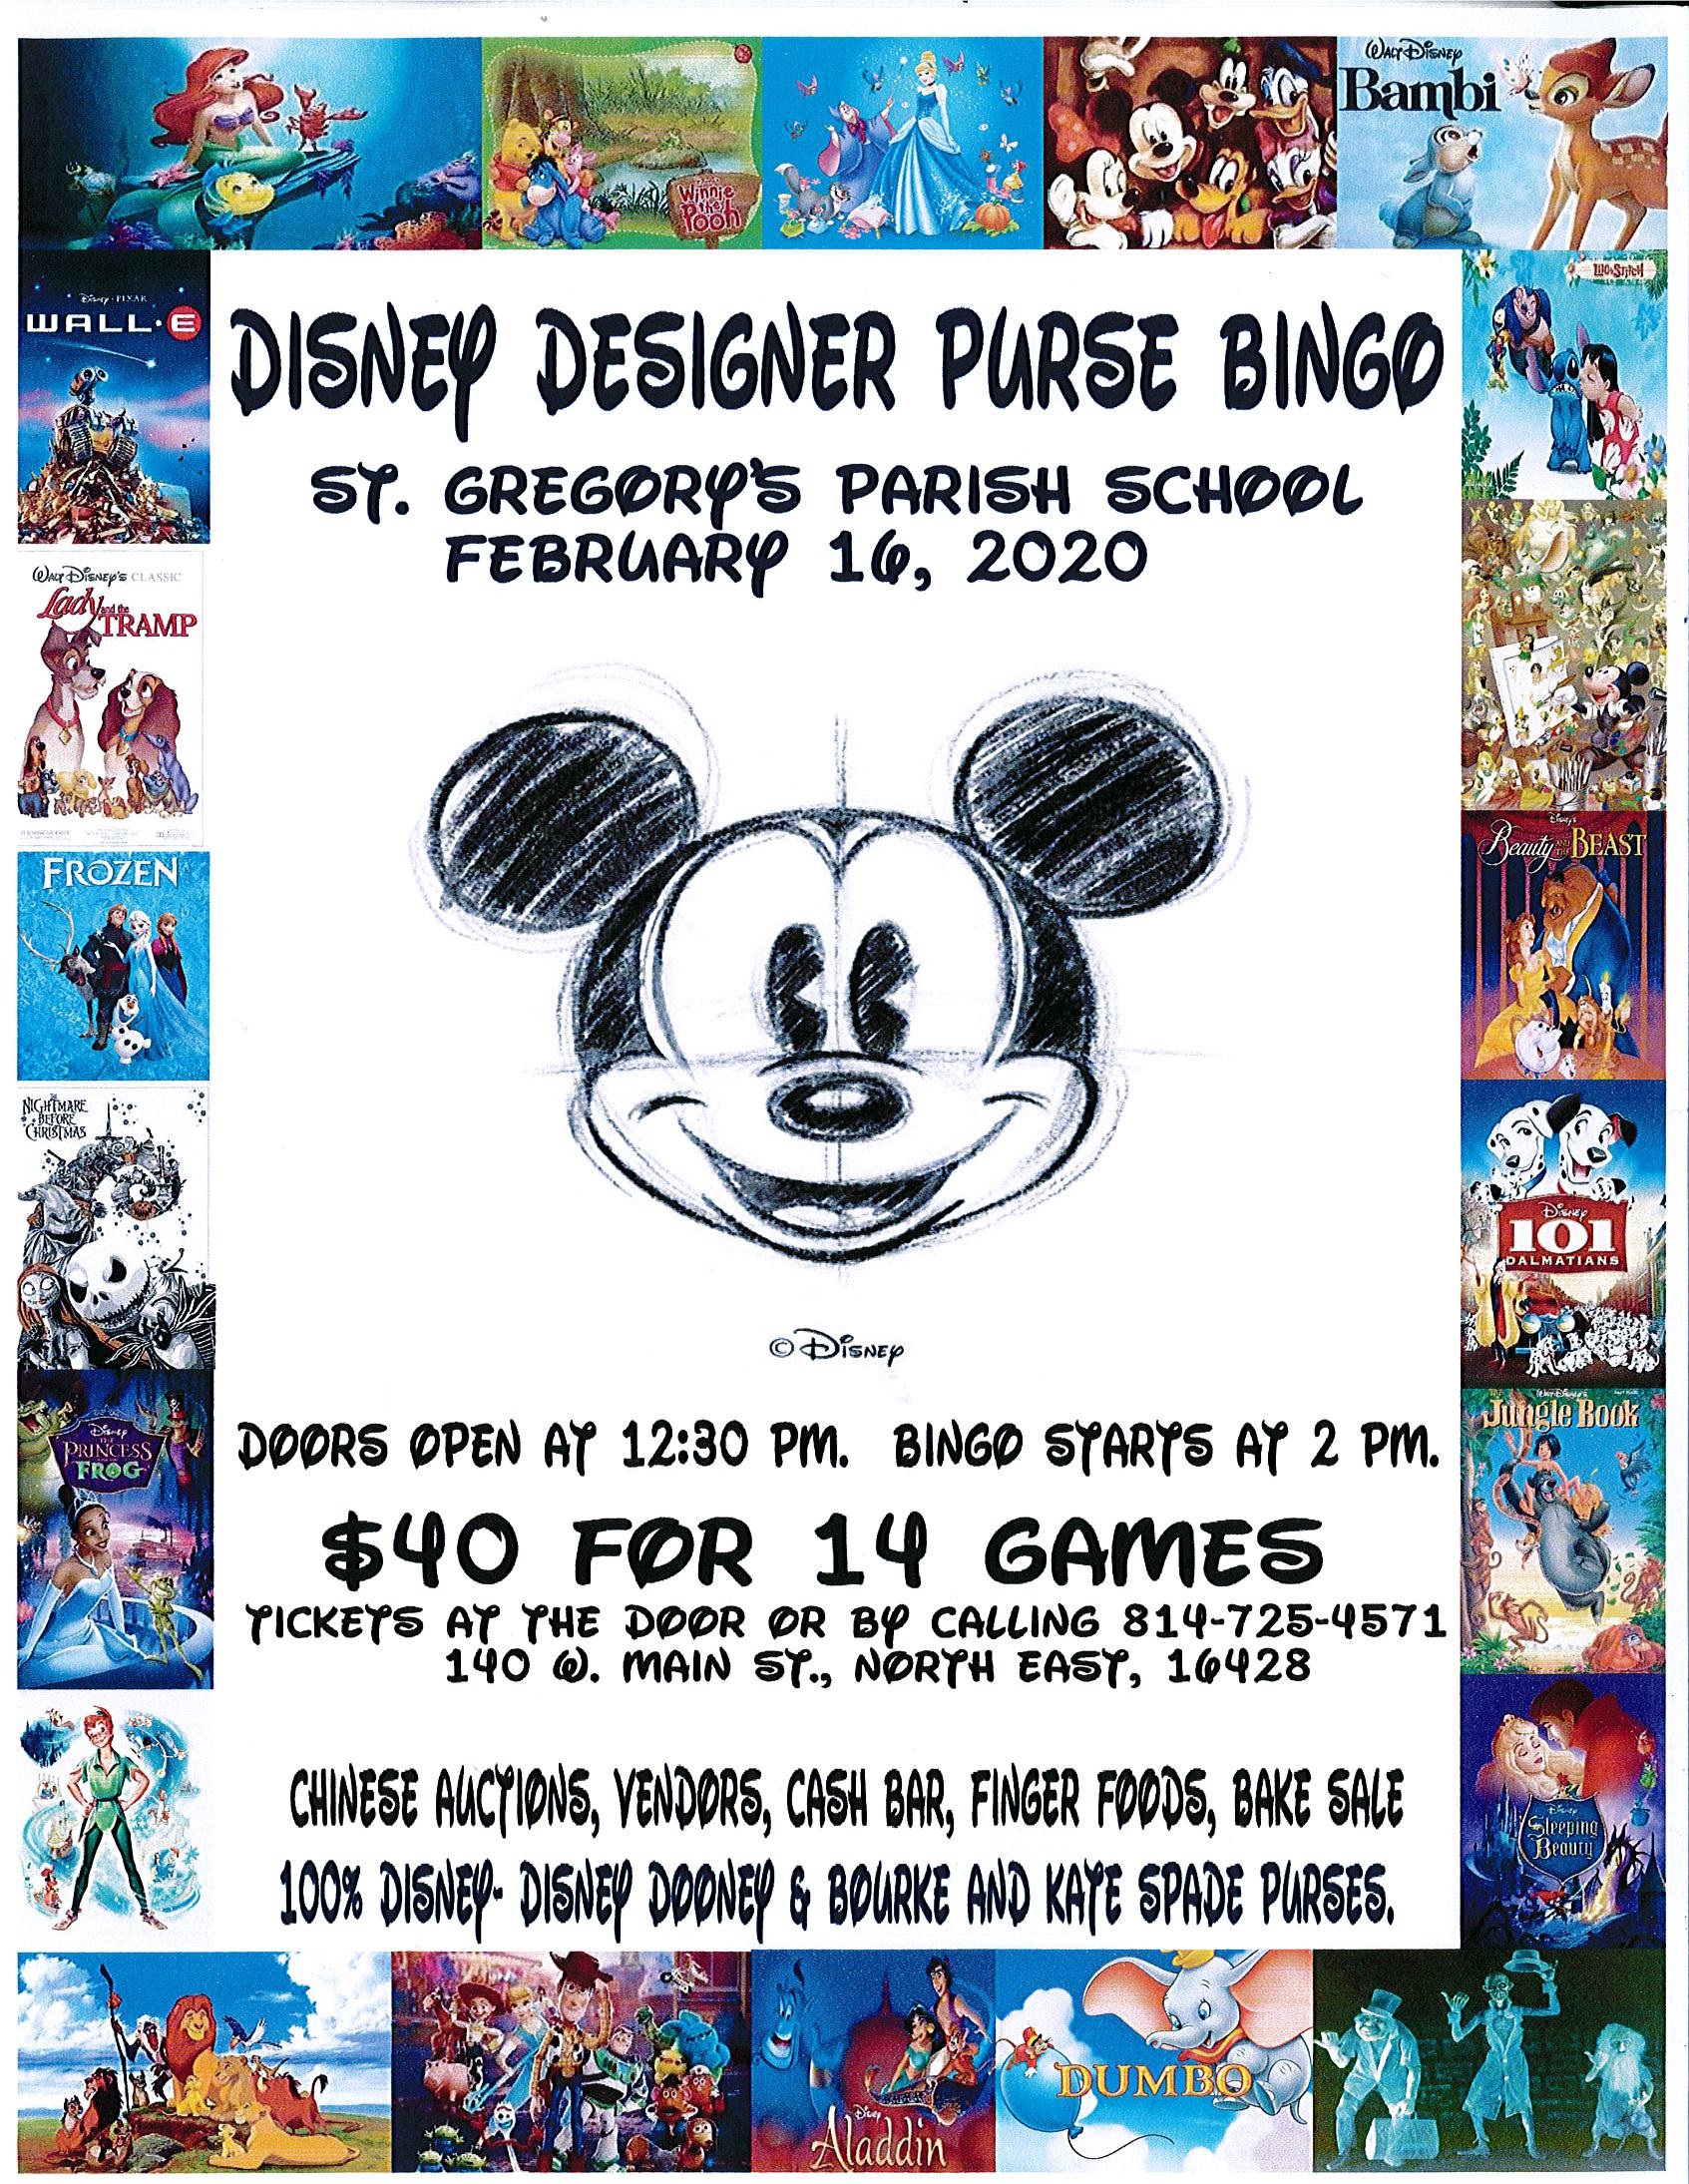 202 Disney Designer Purse Bingo